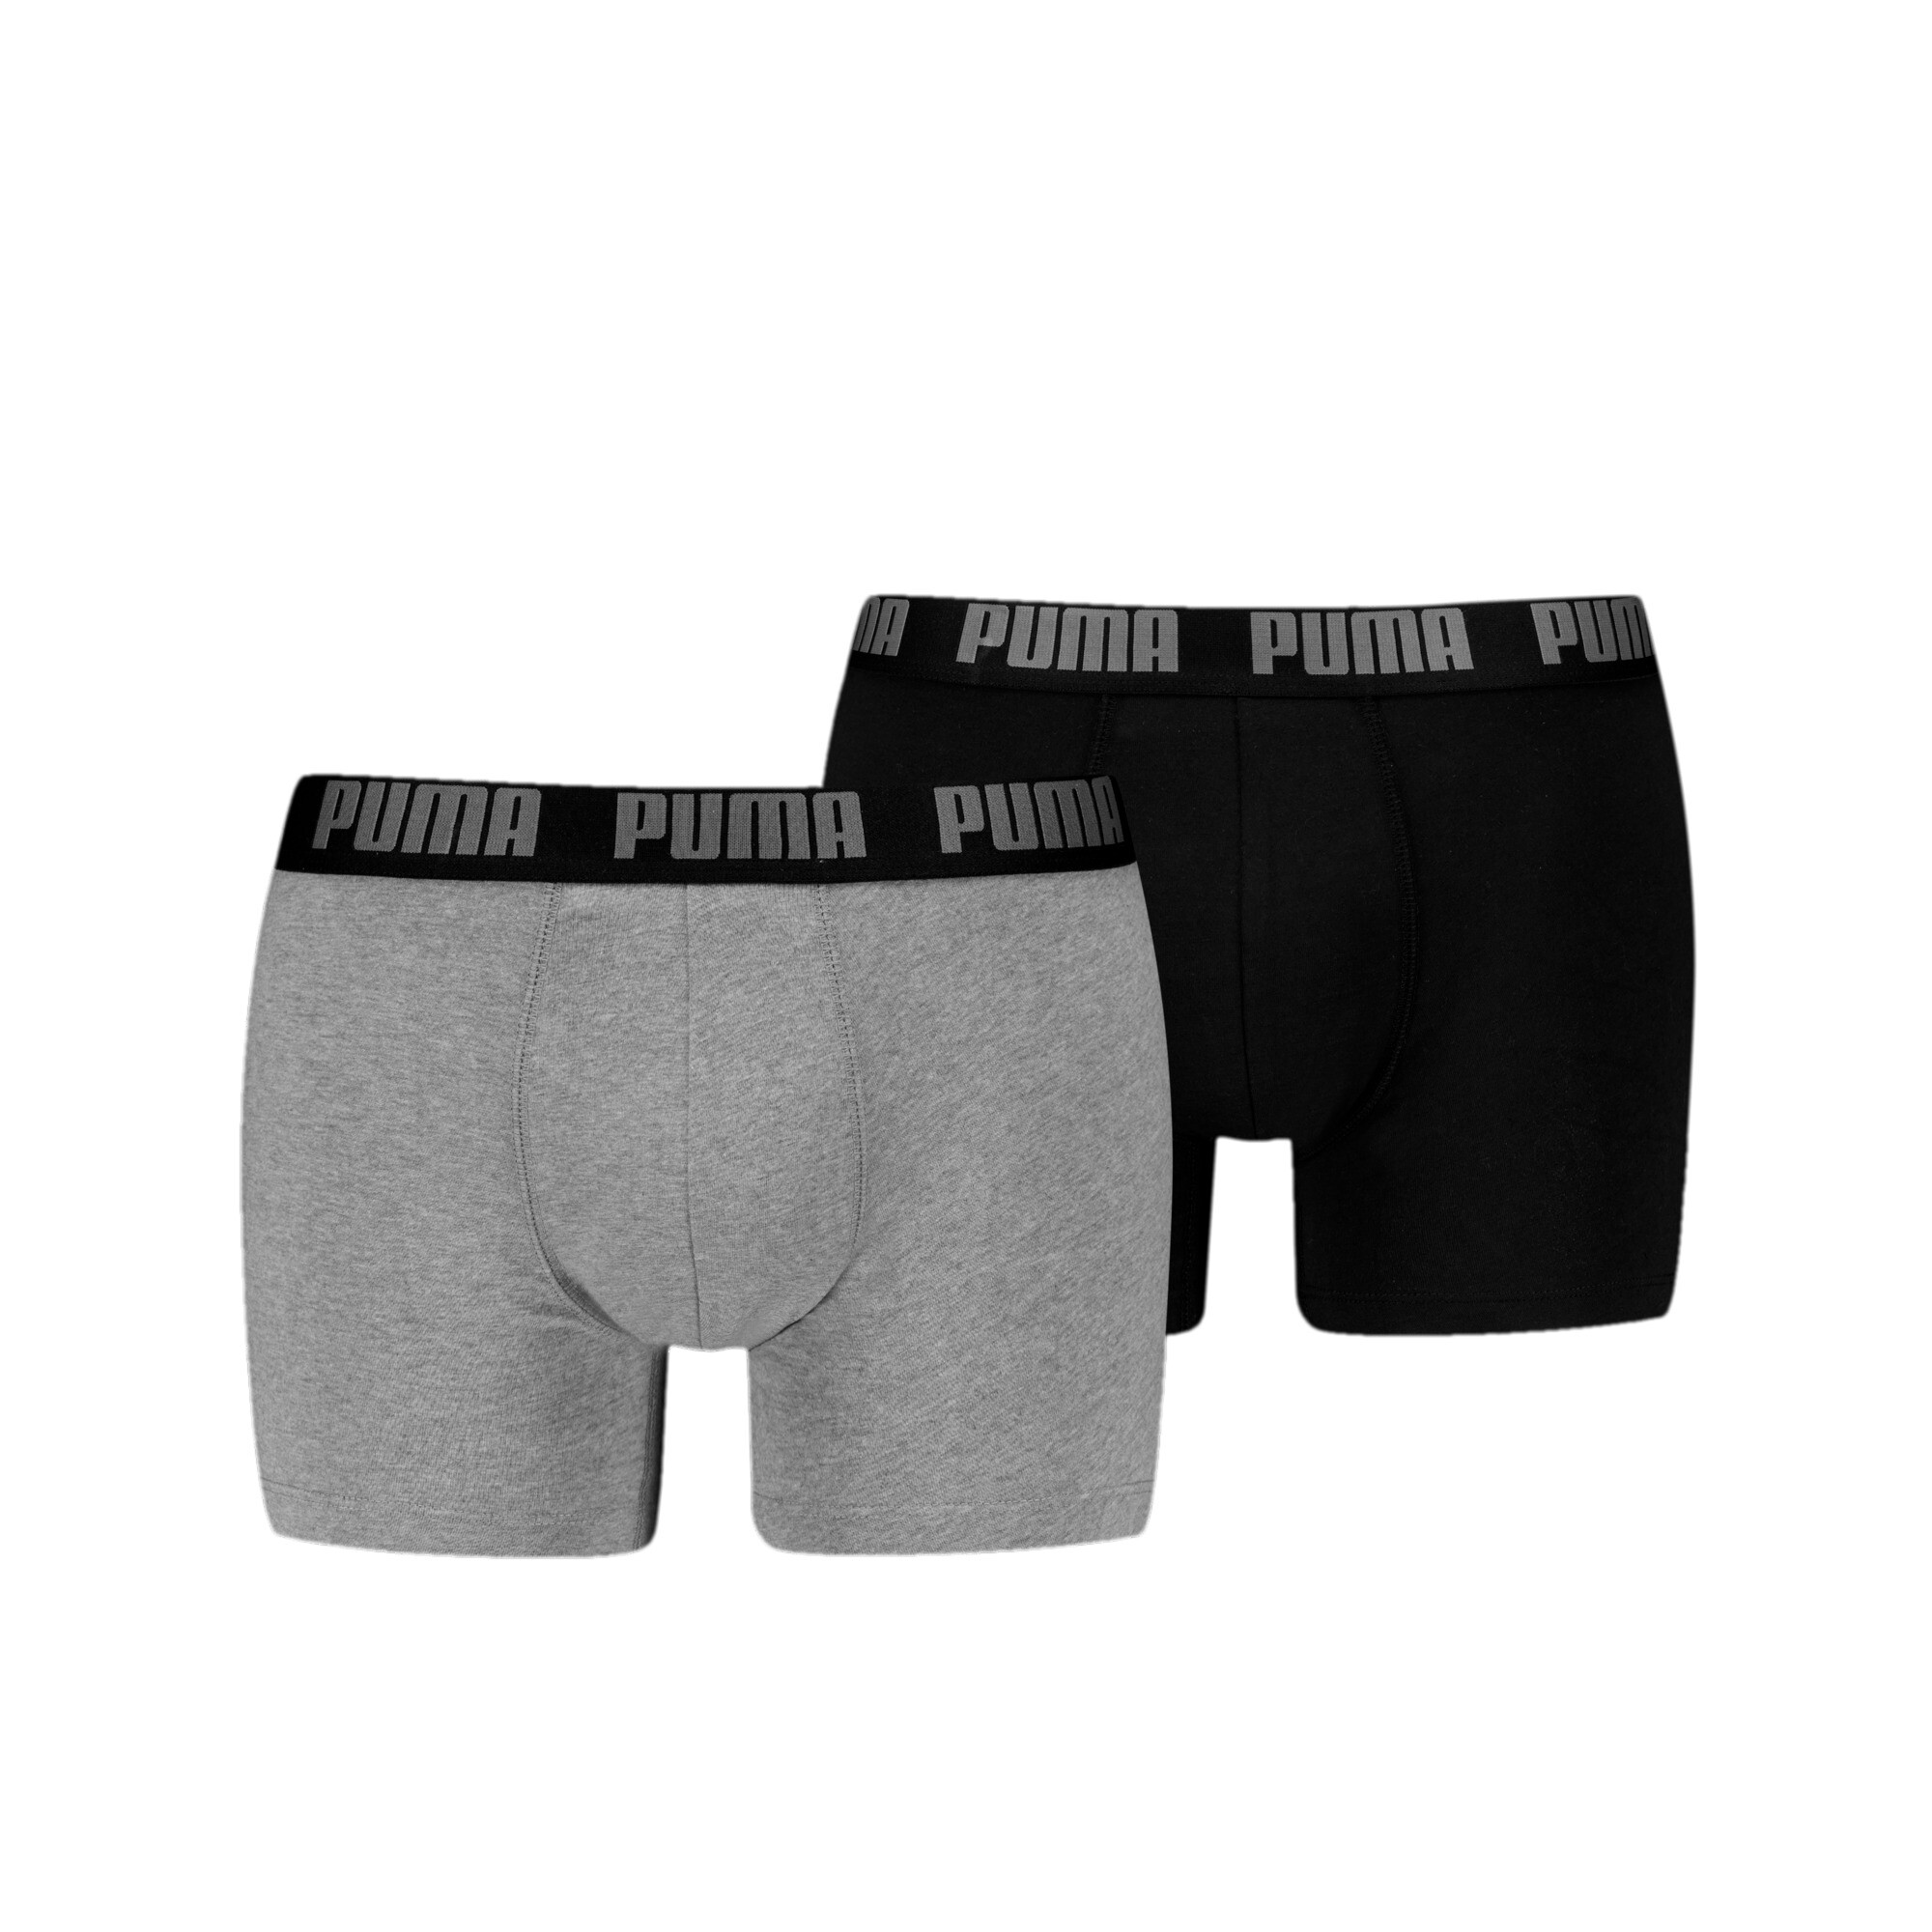 Men's Puma's Boxer Briefs 2 Pack, Gray, Clothing